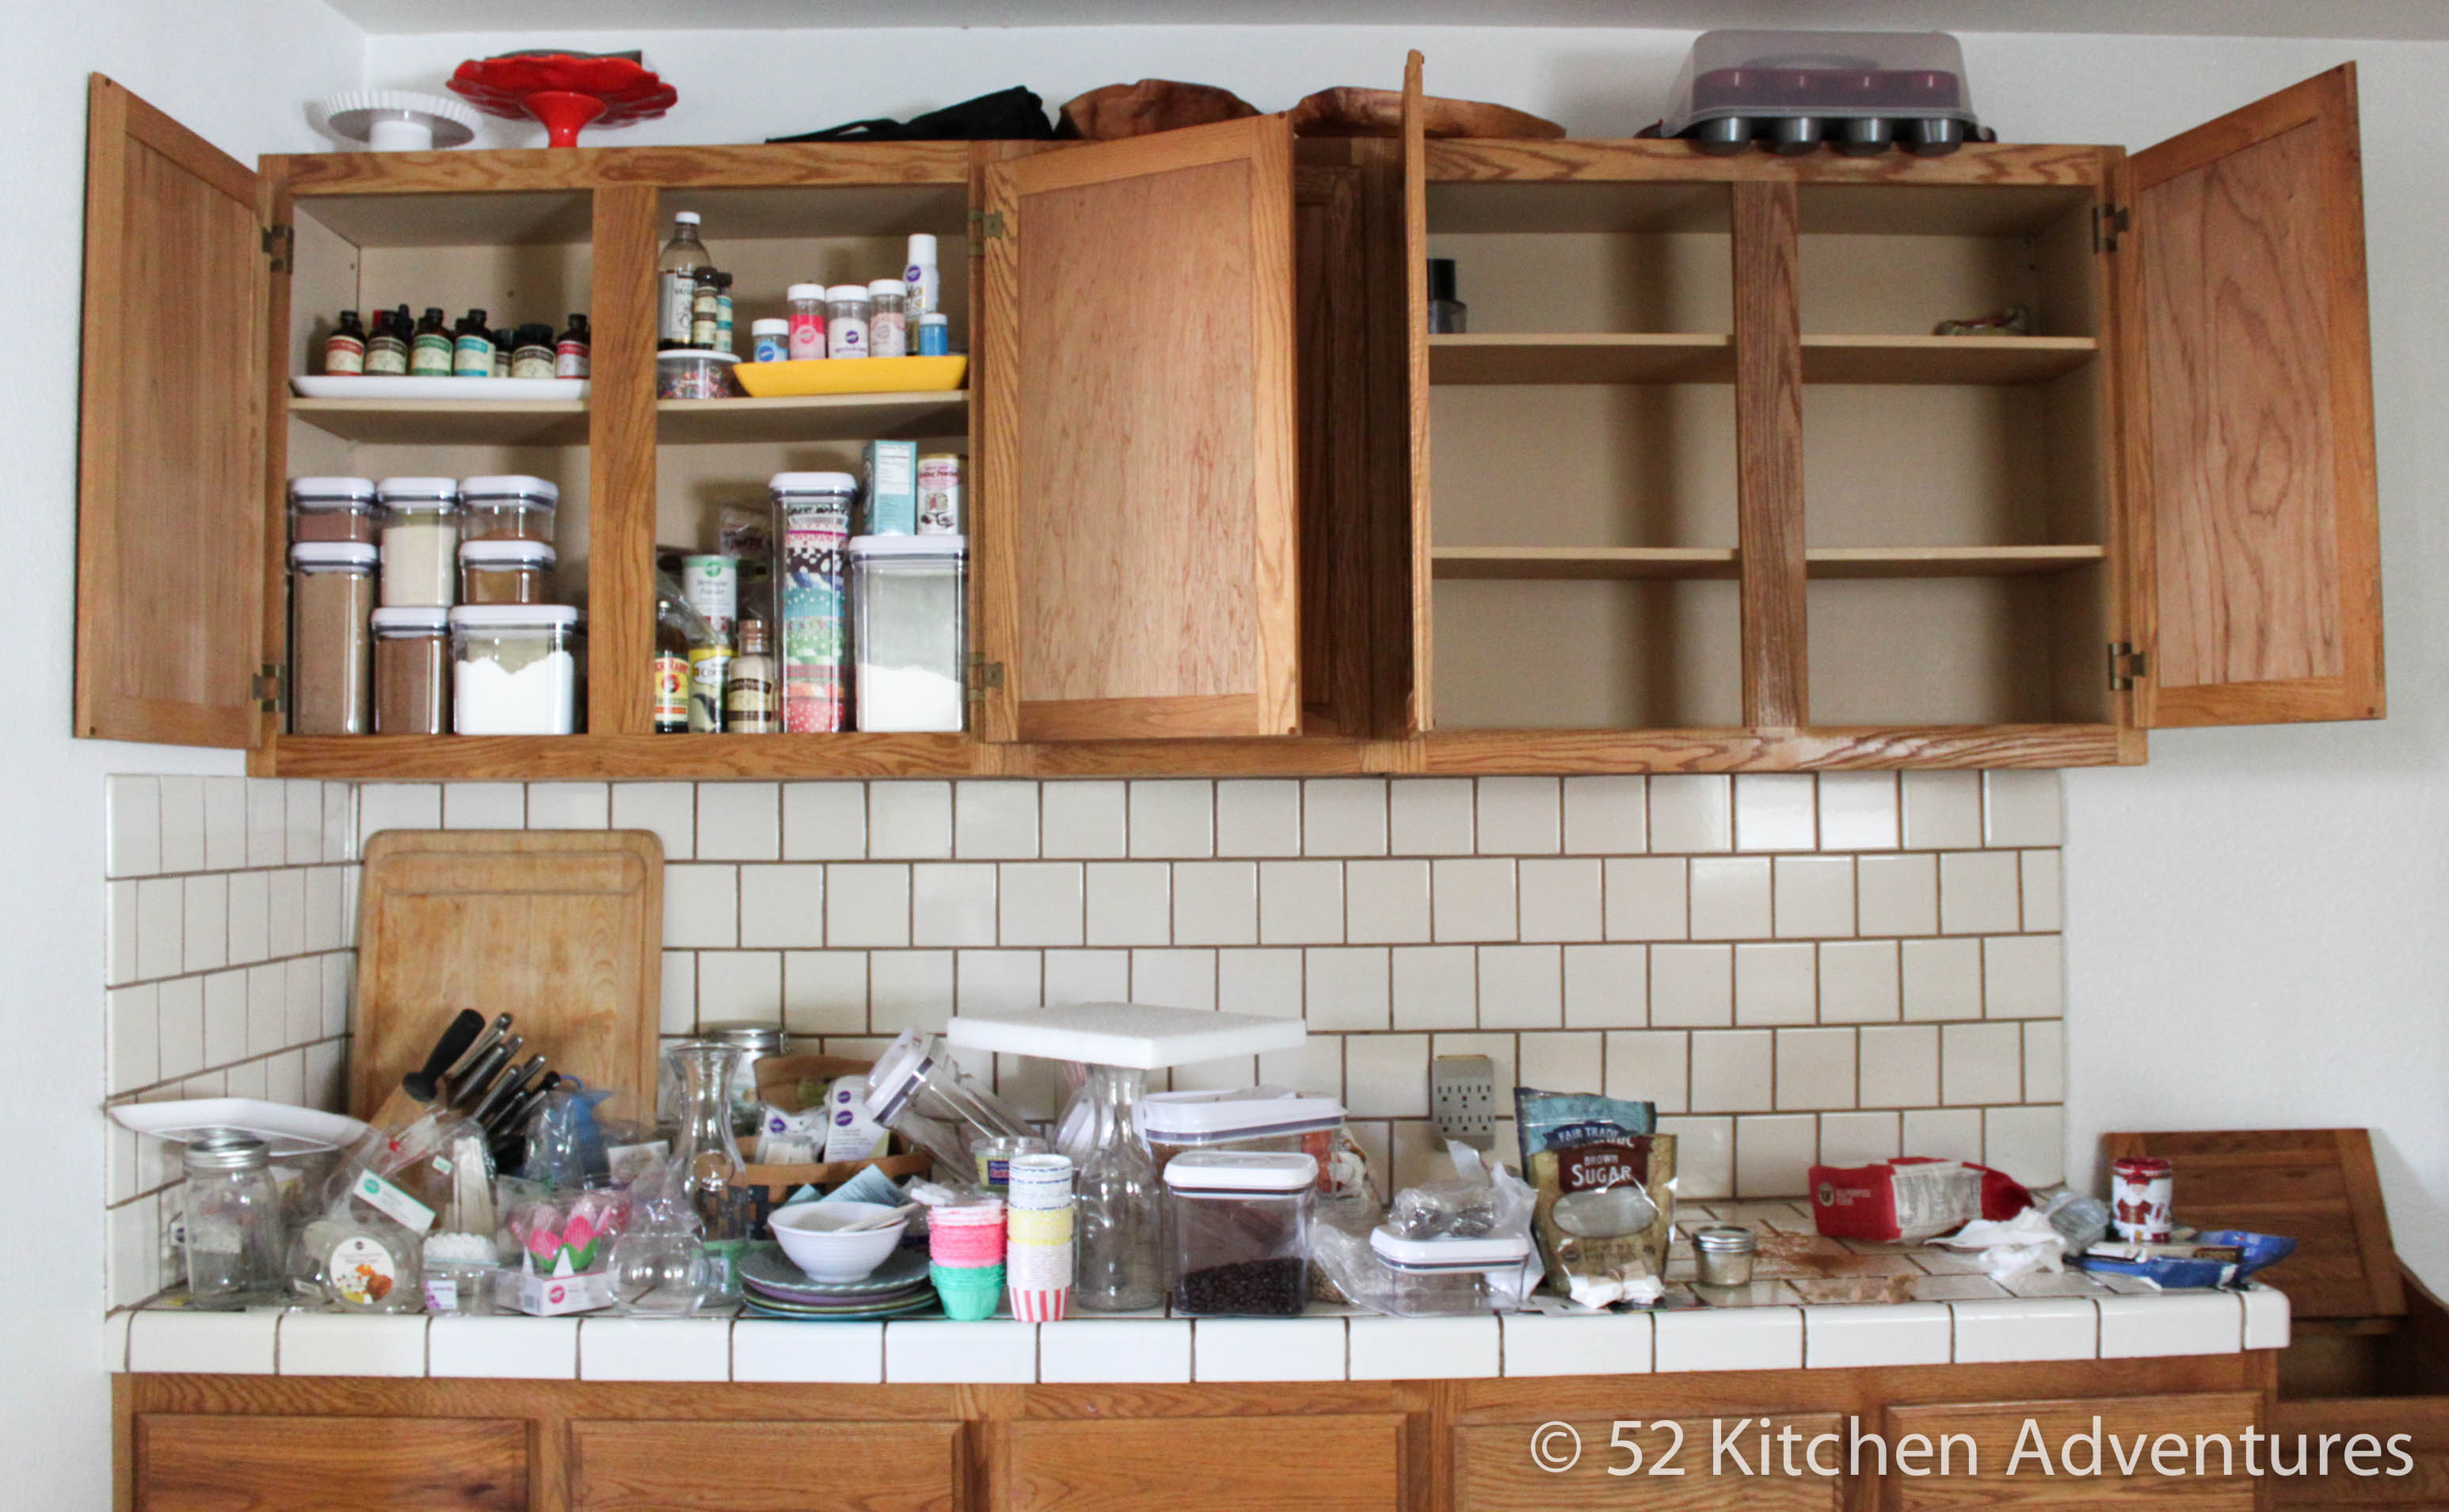 Pretty & Functional Ways to Organize Baking Supplies (pans